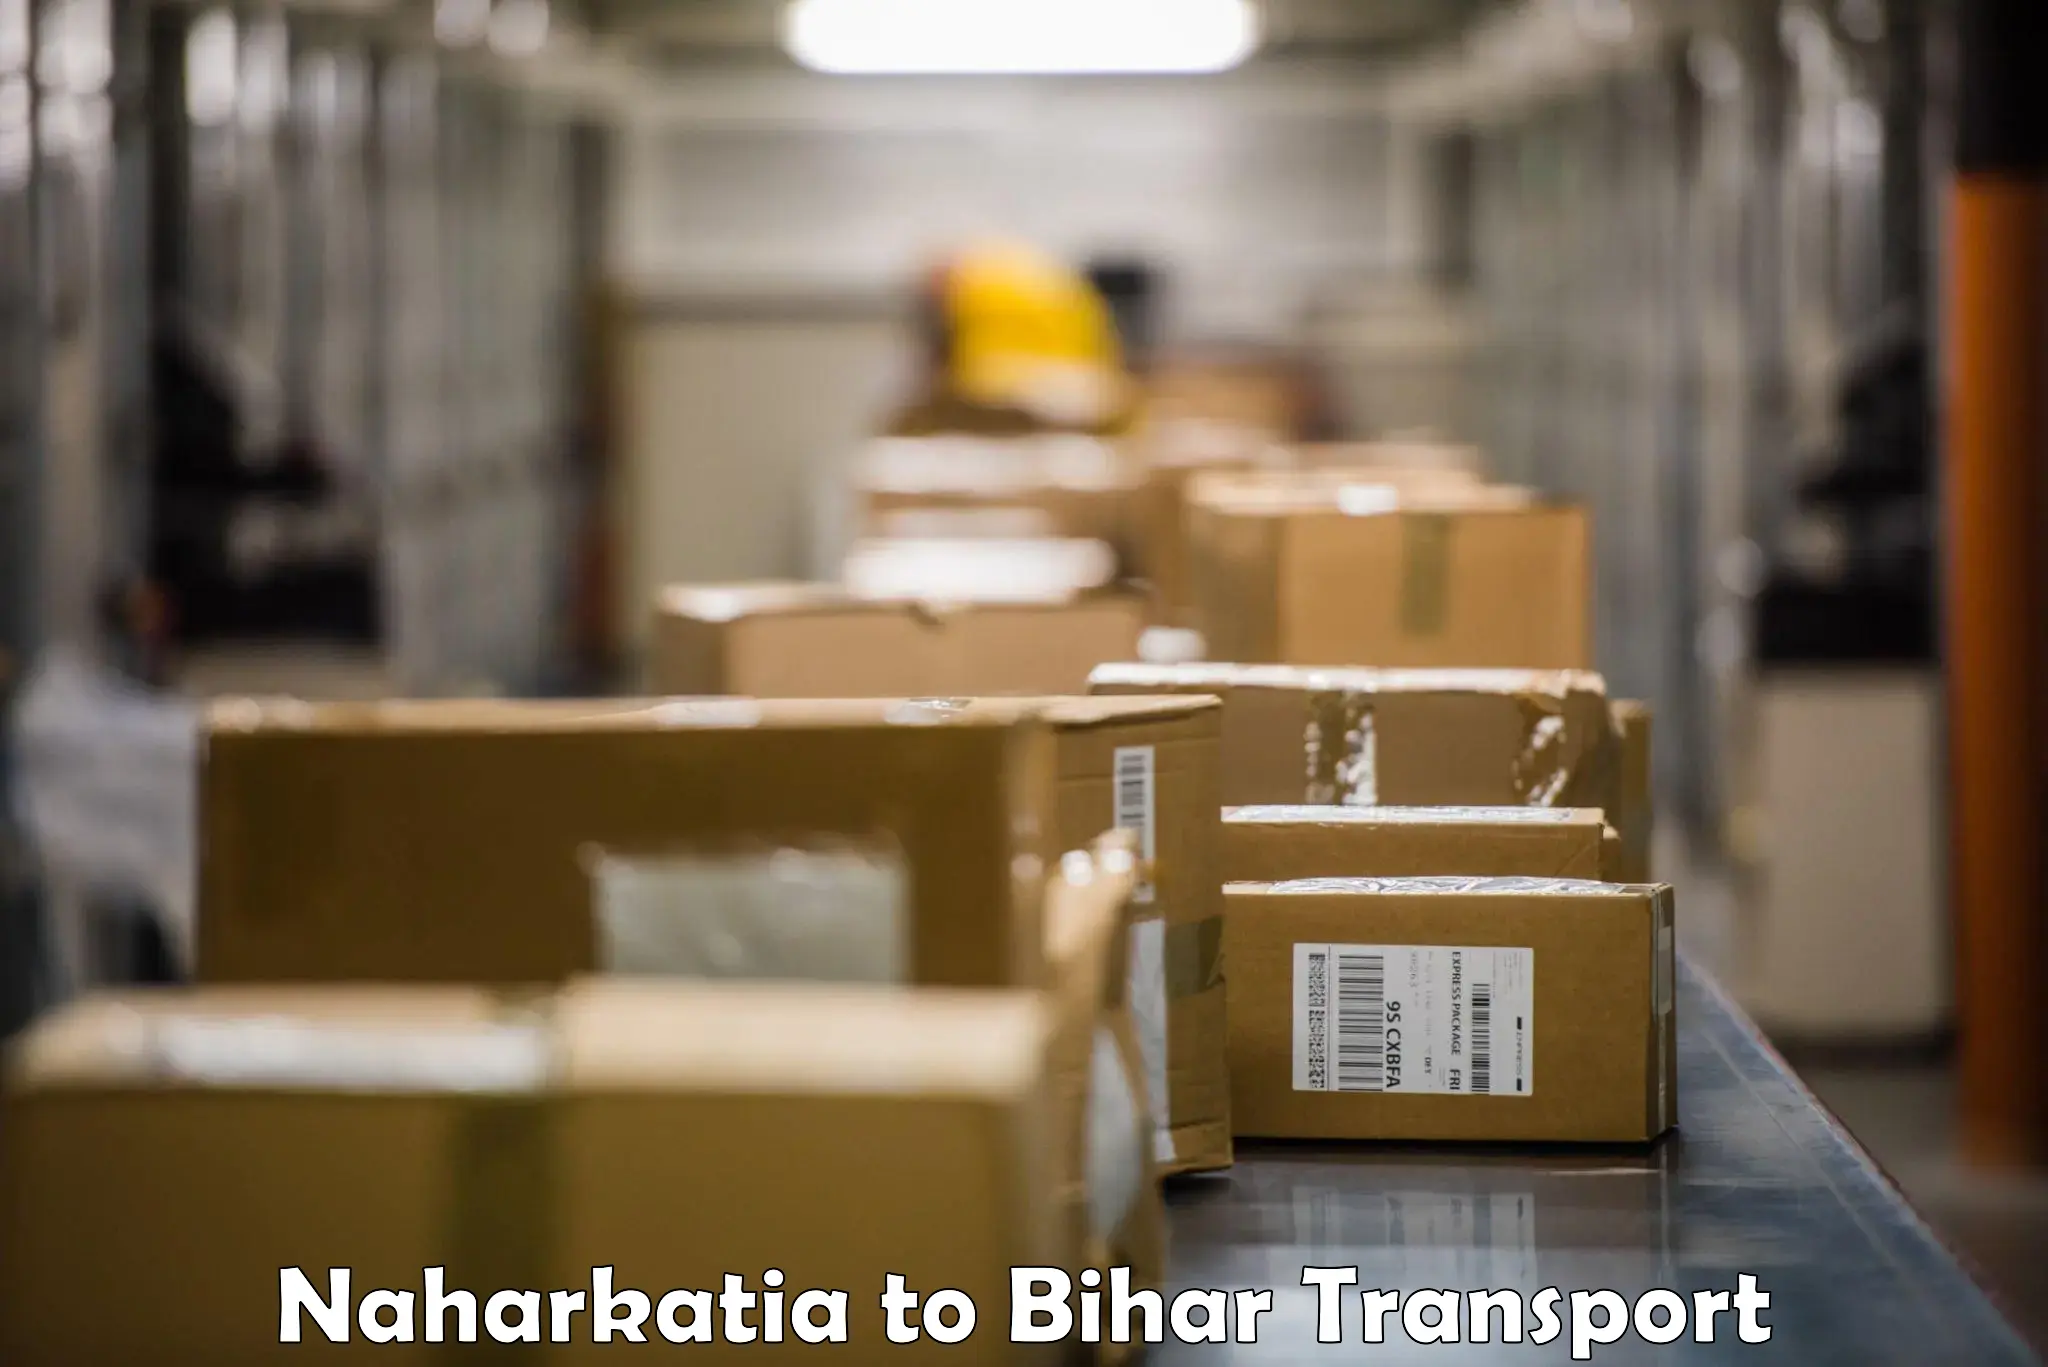 Truck transport companies in India Naharkatia to Maranga